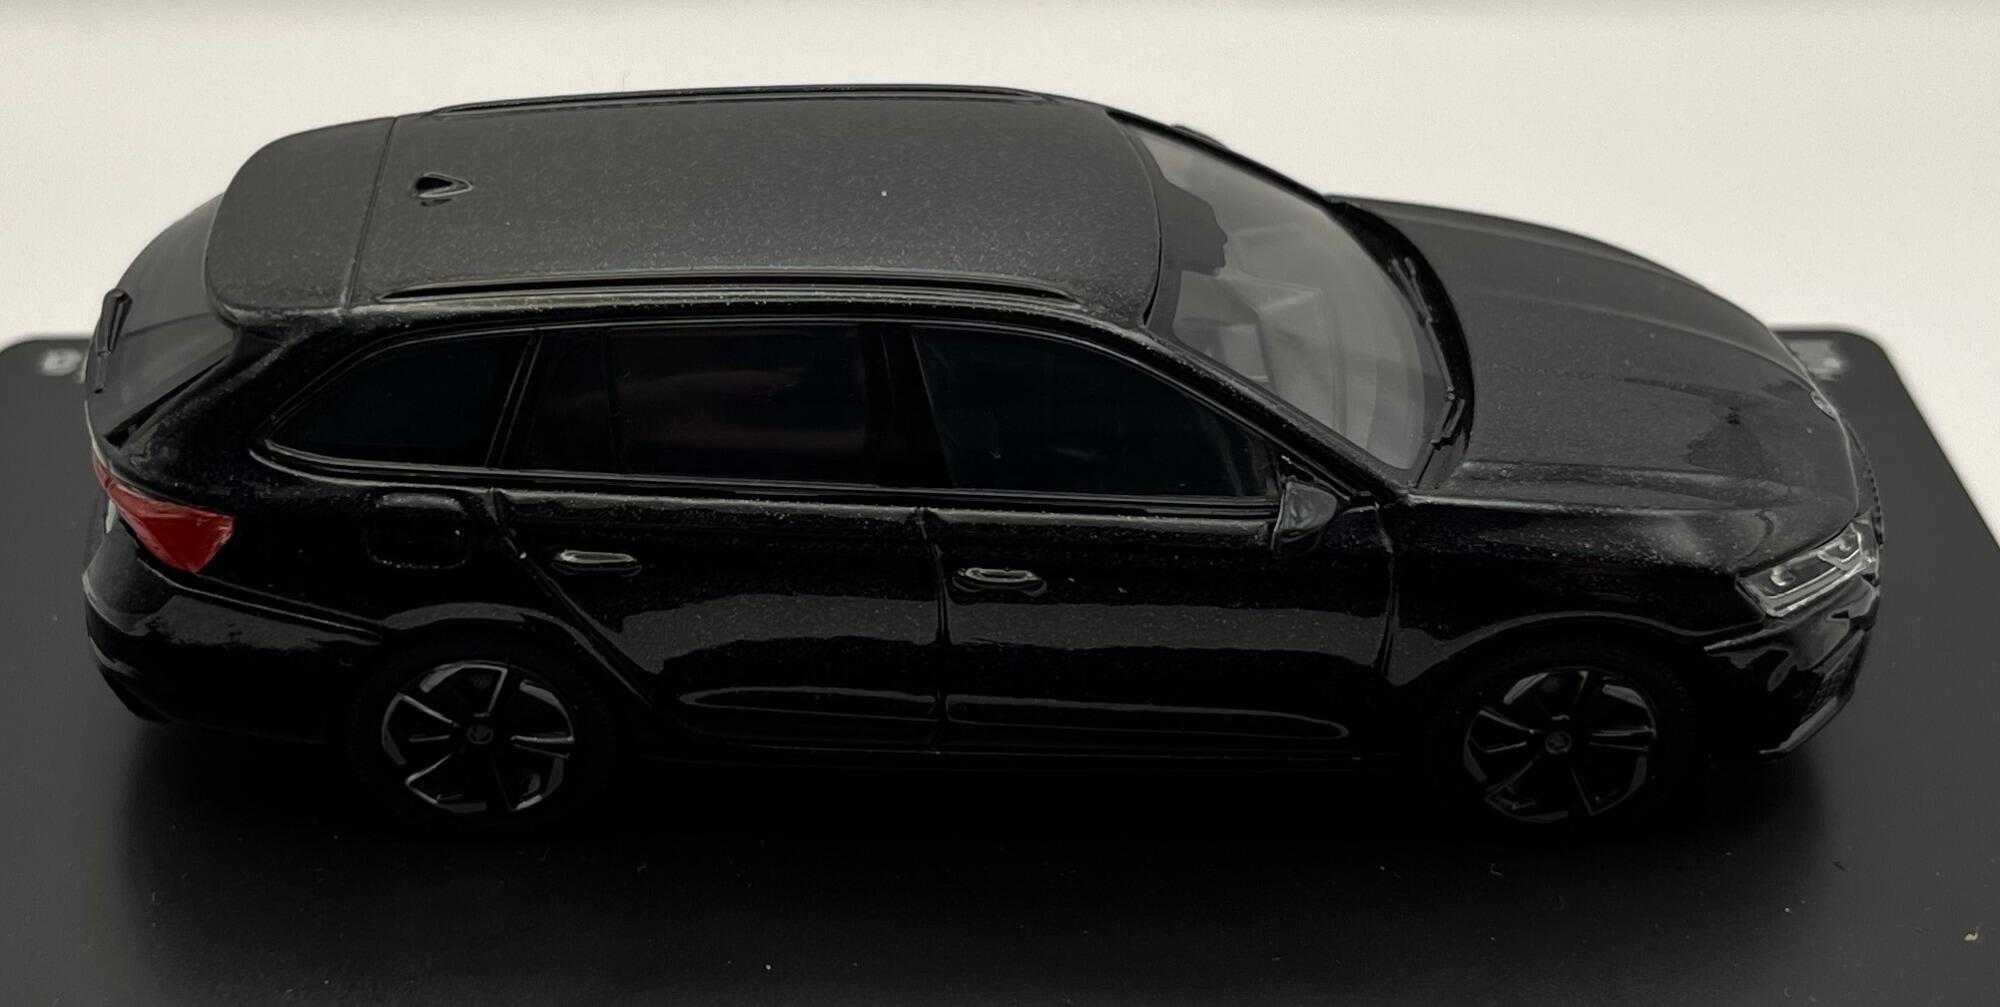 Skoda Octavia IV Estate RS 2020 in metallic black magic, 1:43 scale diecast car model from Abrex, ABR143039D